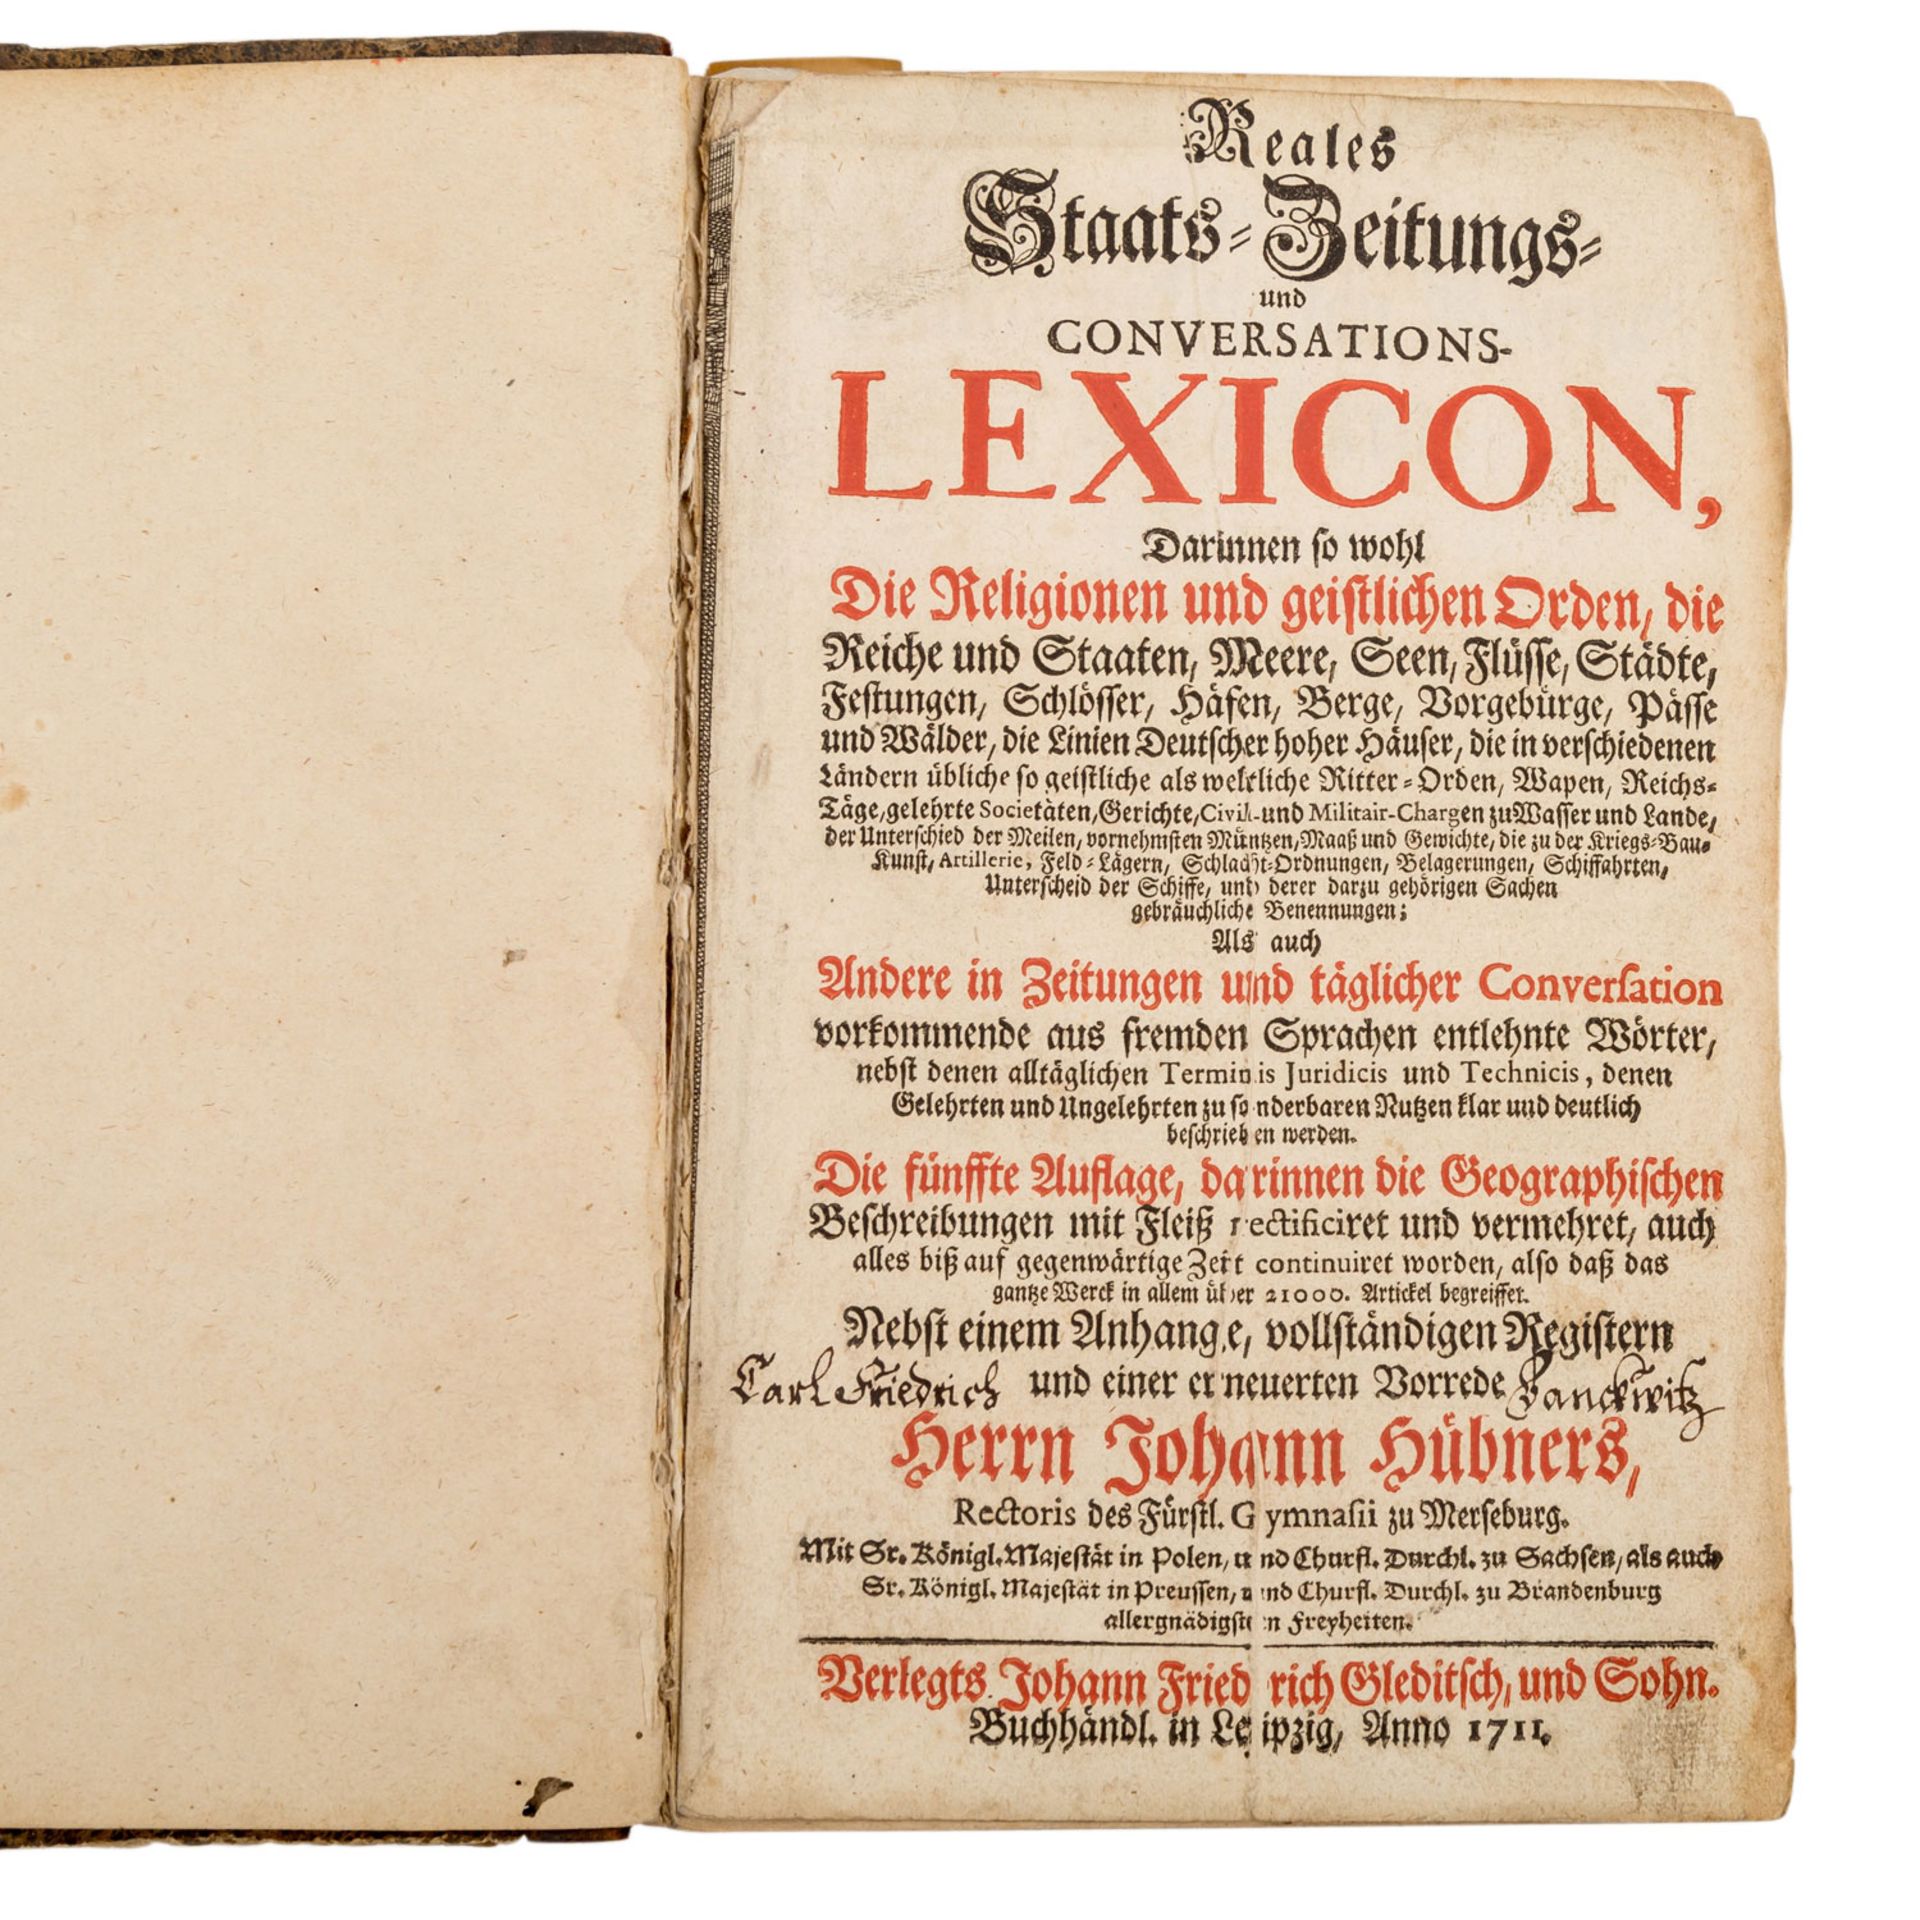 "Reales Staats-Zeitungs-und Conversations-Lexikon", Leipzig 1711 -Hist. Lexikon aus dem 18.Jh.,